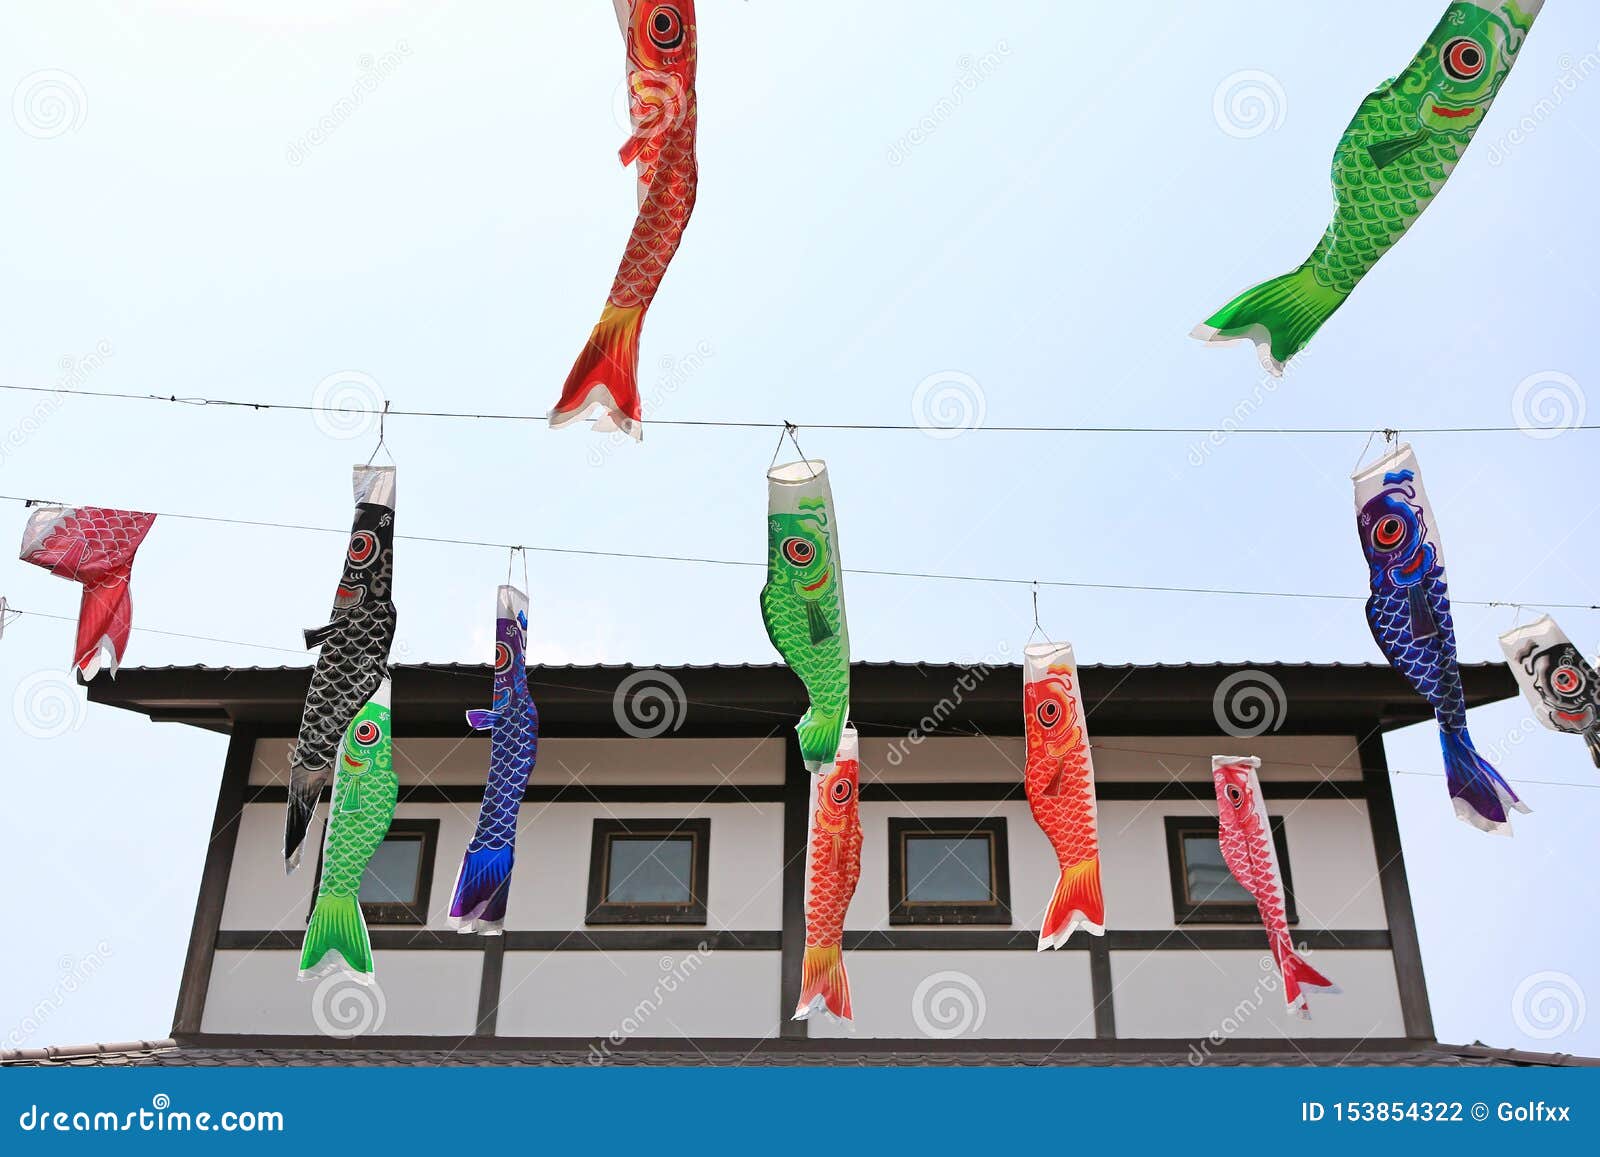 Japanese koi carp flag decoration blow in the wind.koinobori